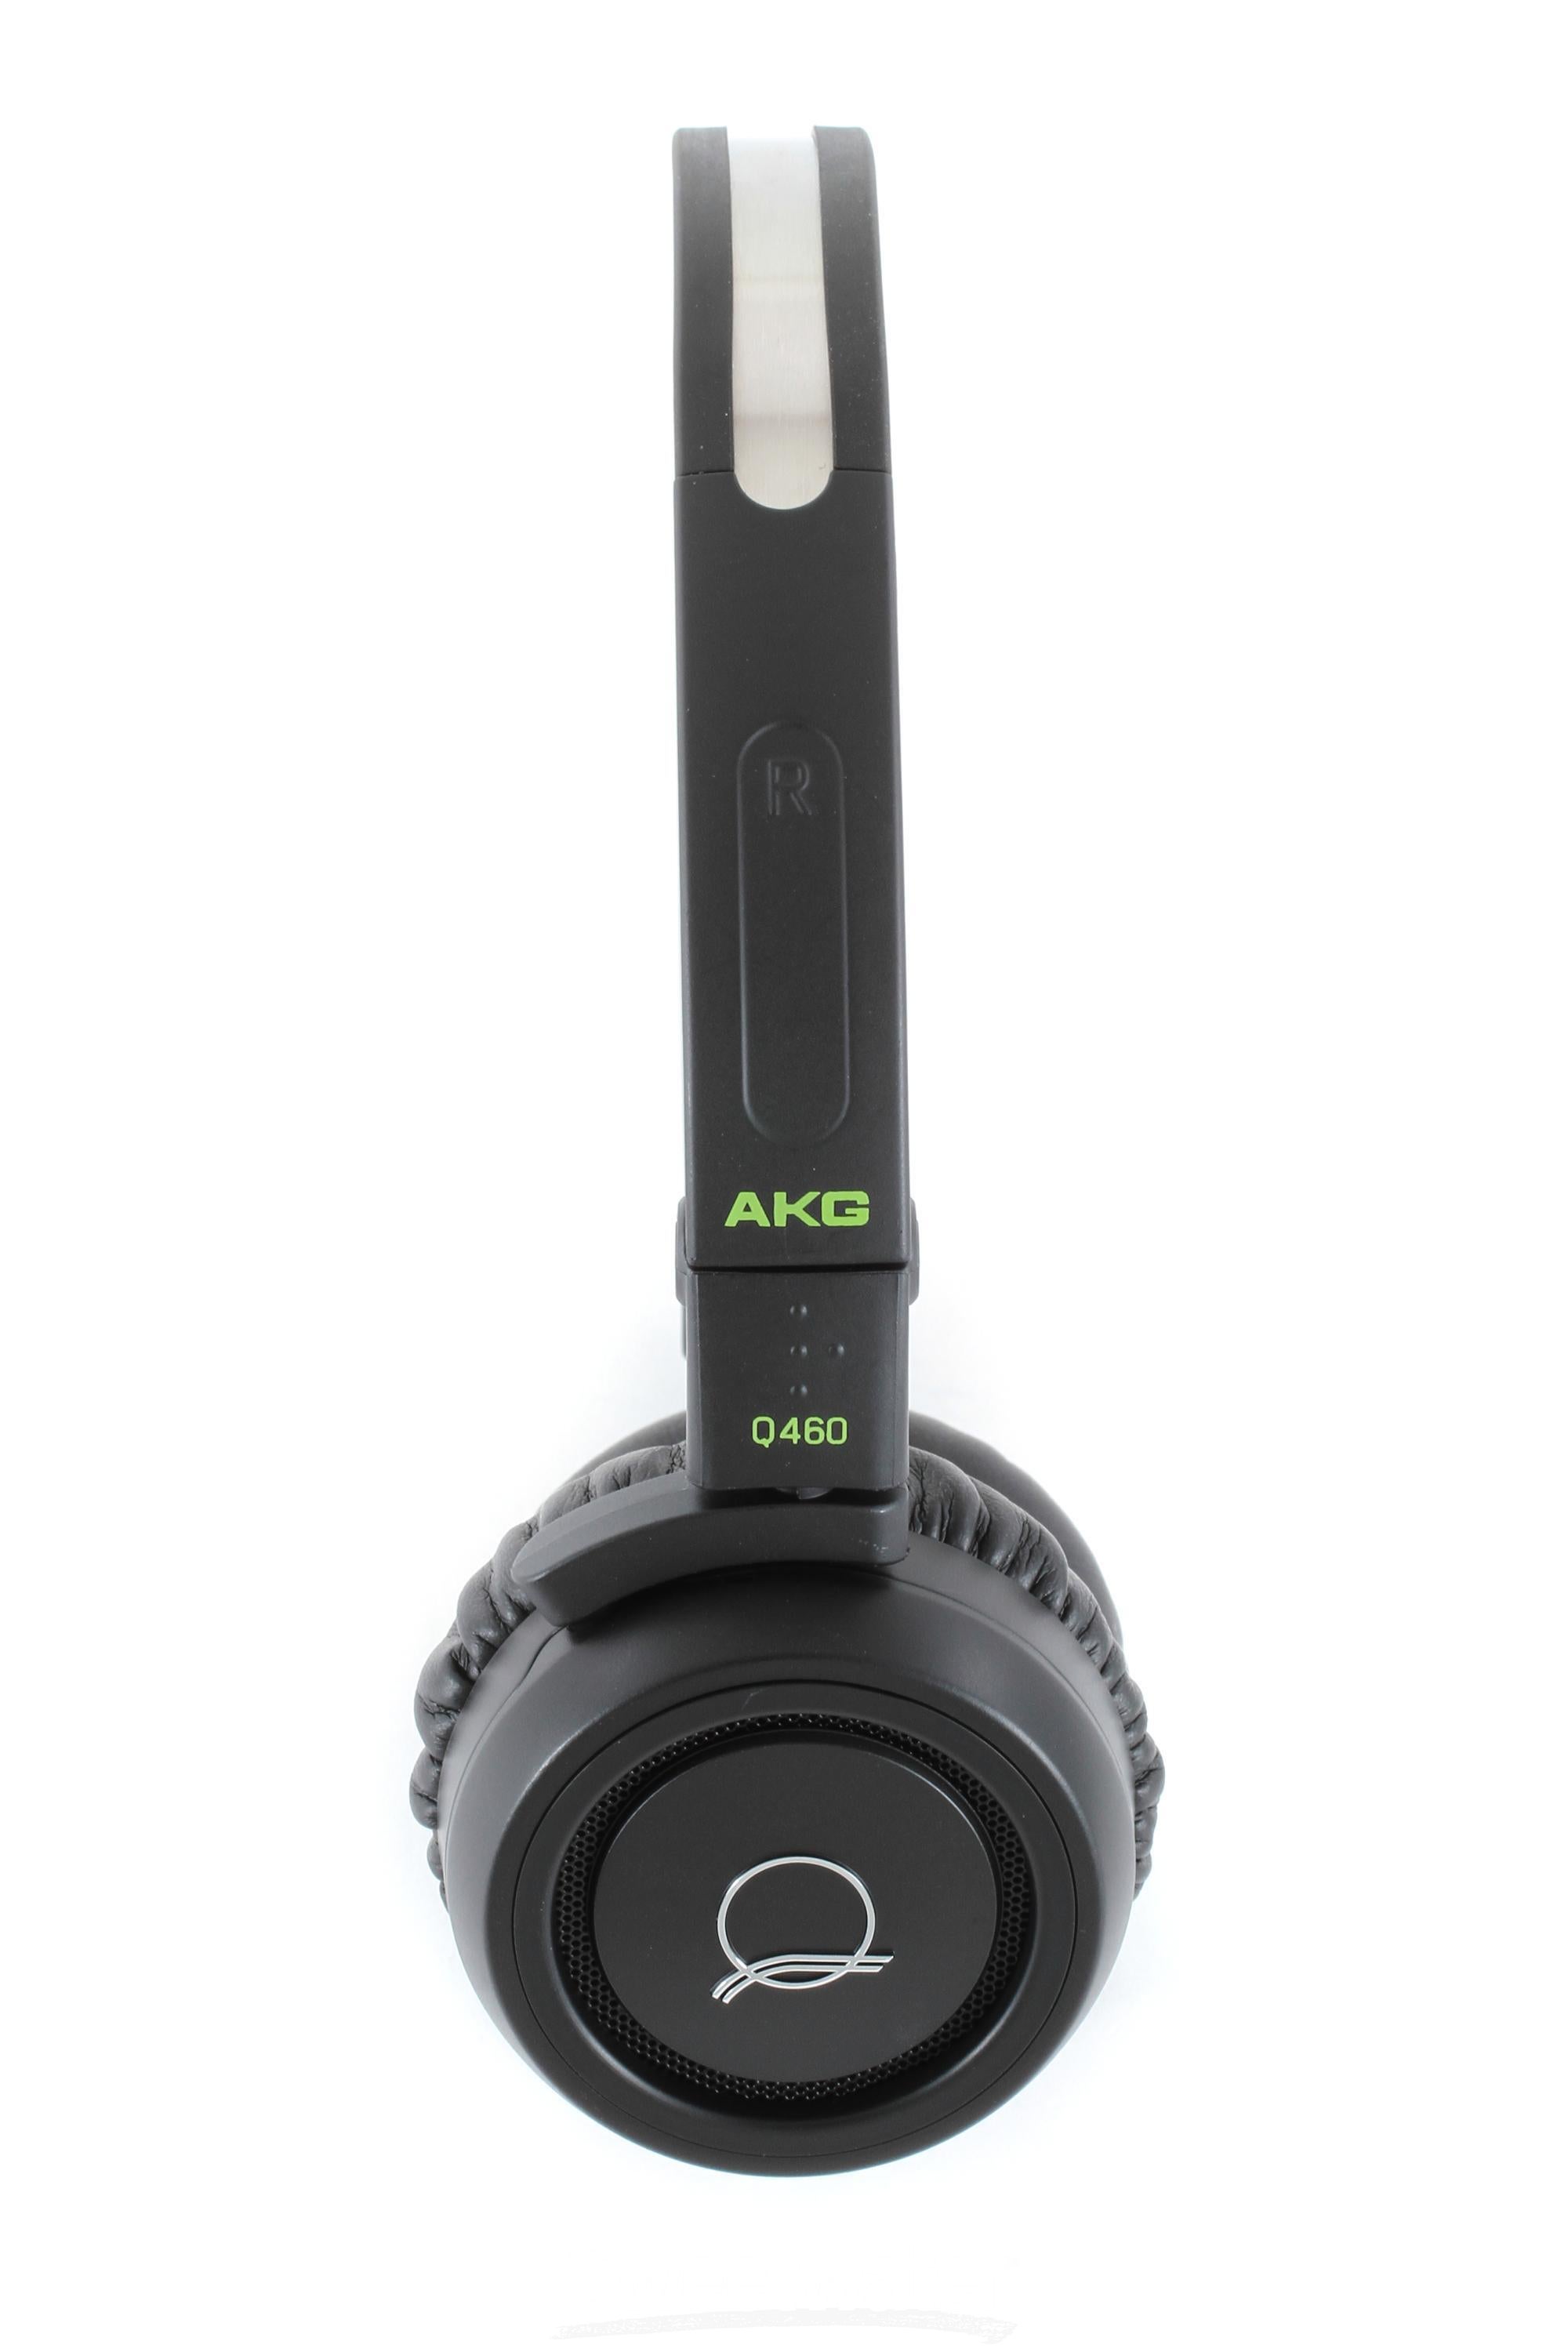 AKG Quincy Jones Q460 Folding Mini Headphones, Black - Closed 